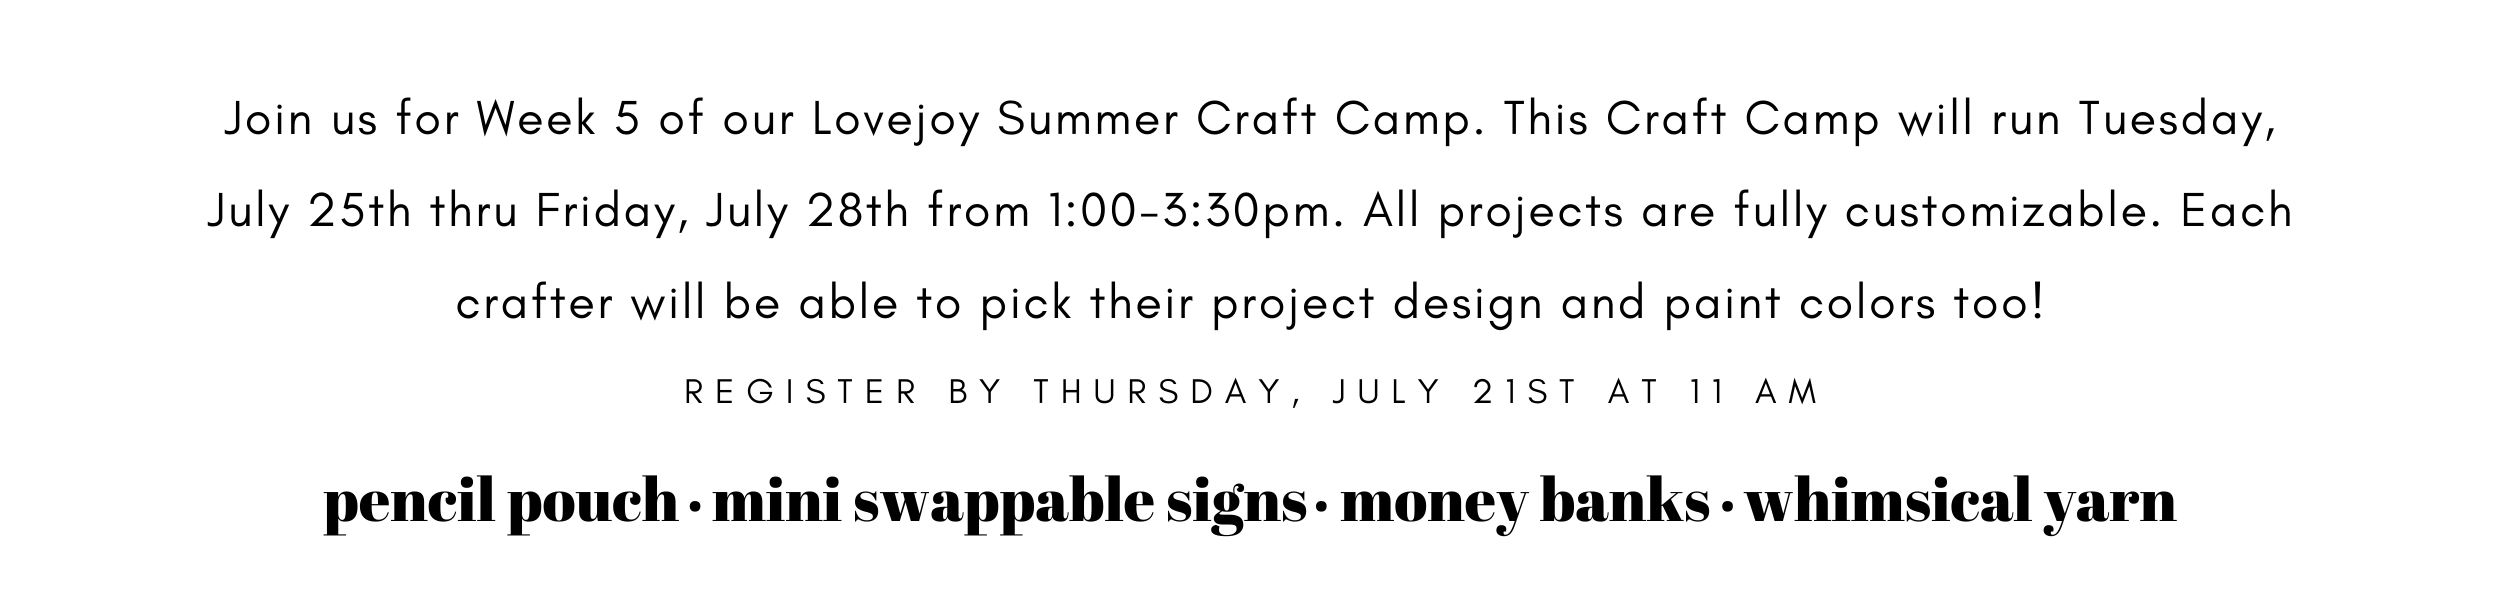 Summer Craft Camp Week 5 | Lovejoy Workshop | Hillsboro, Oregon | www.lovejoyworkshop.com